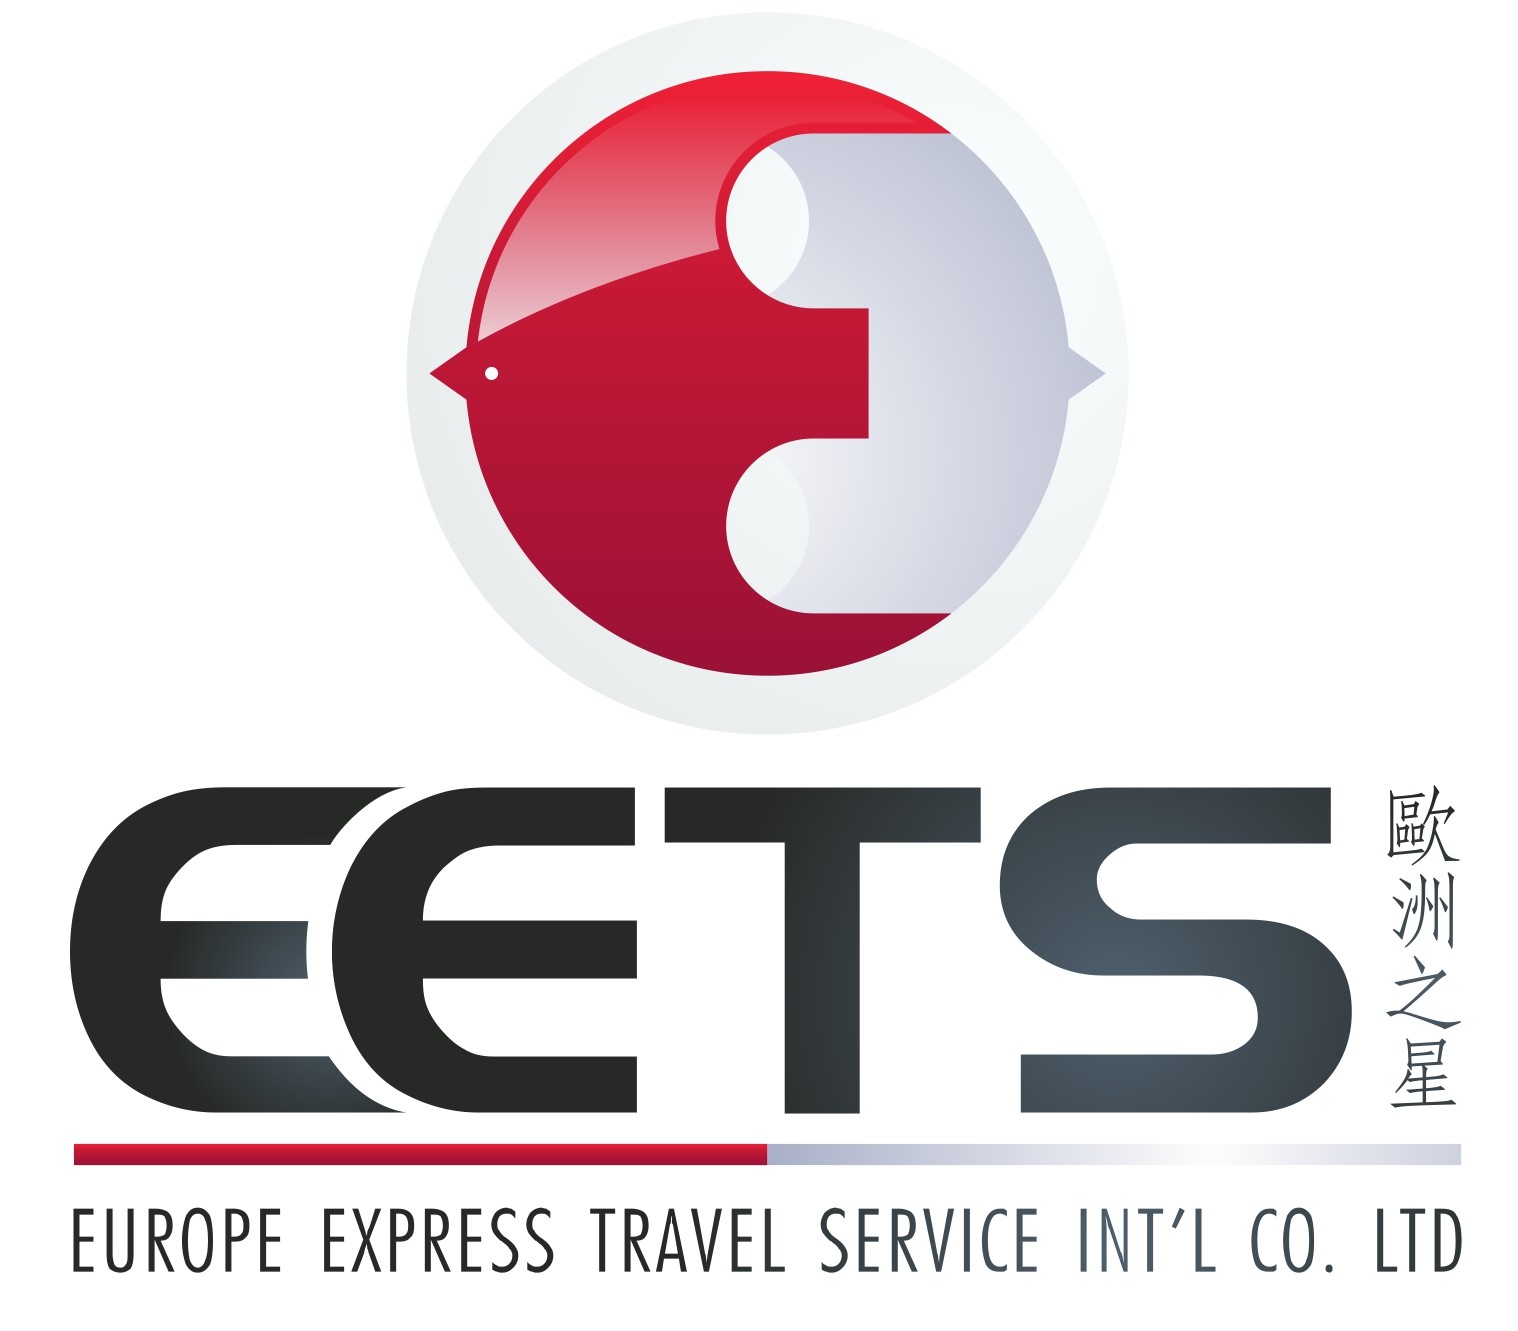 Europe Express Travel Service Int'l  Co., Ltd.